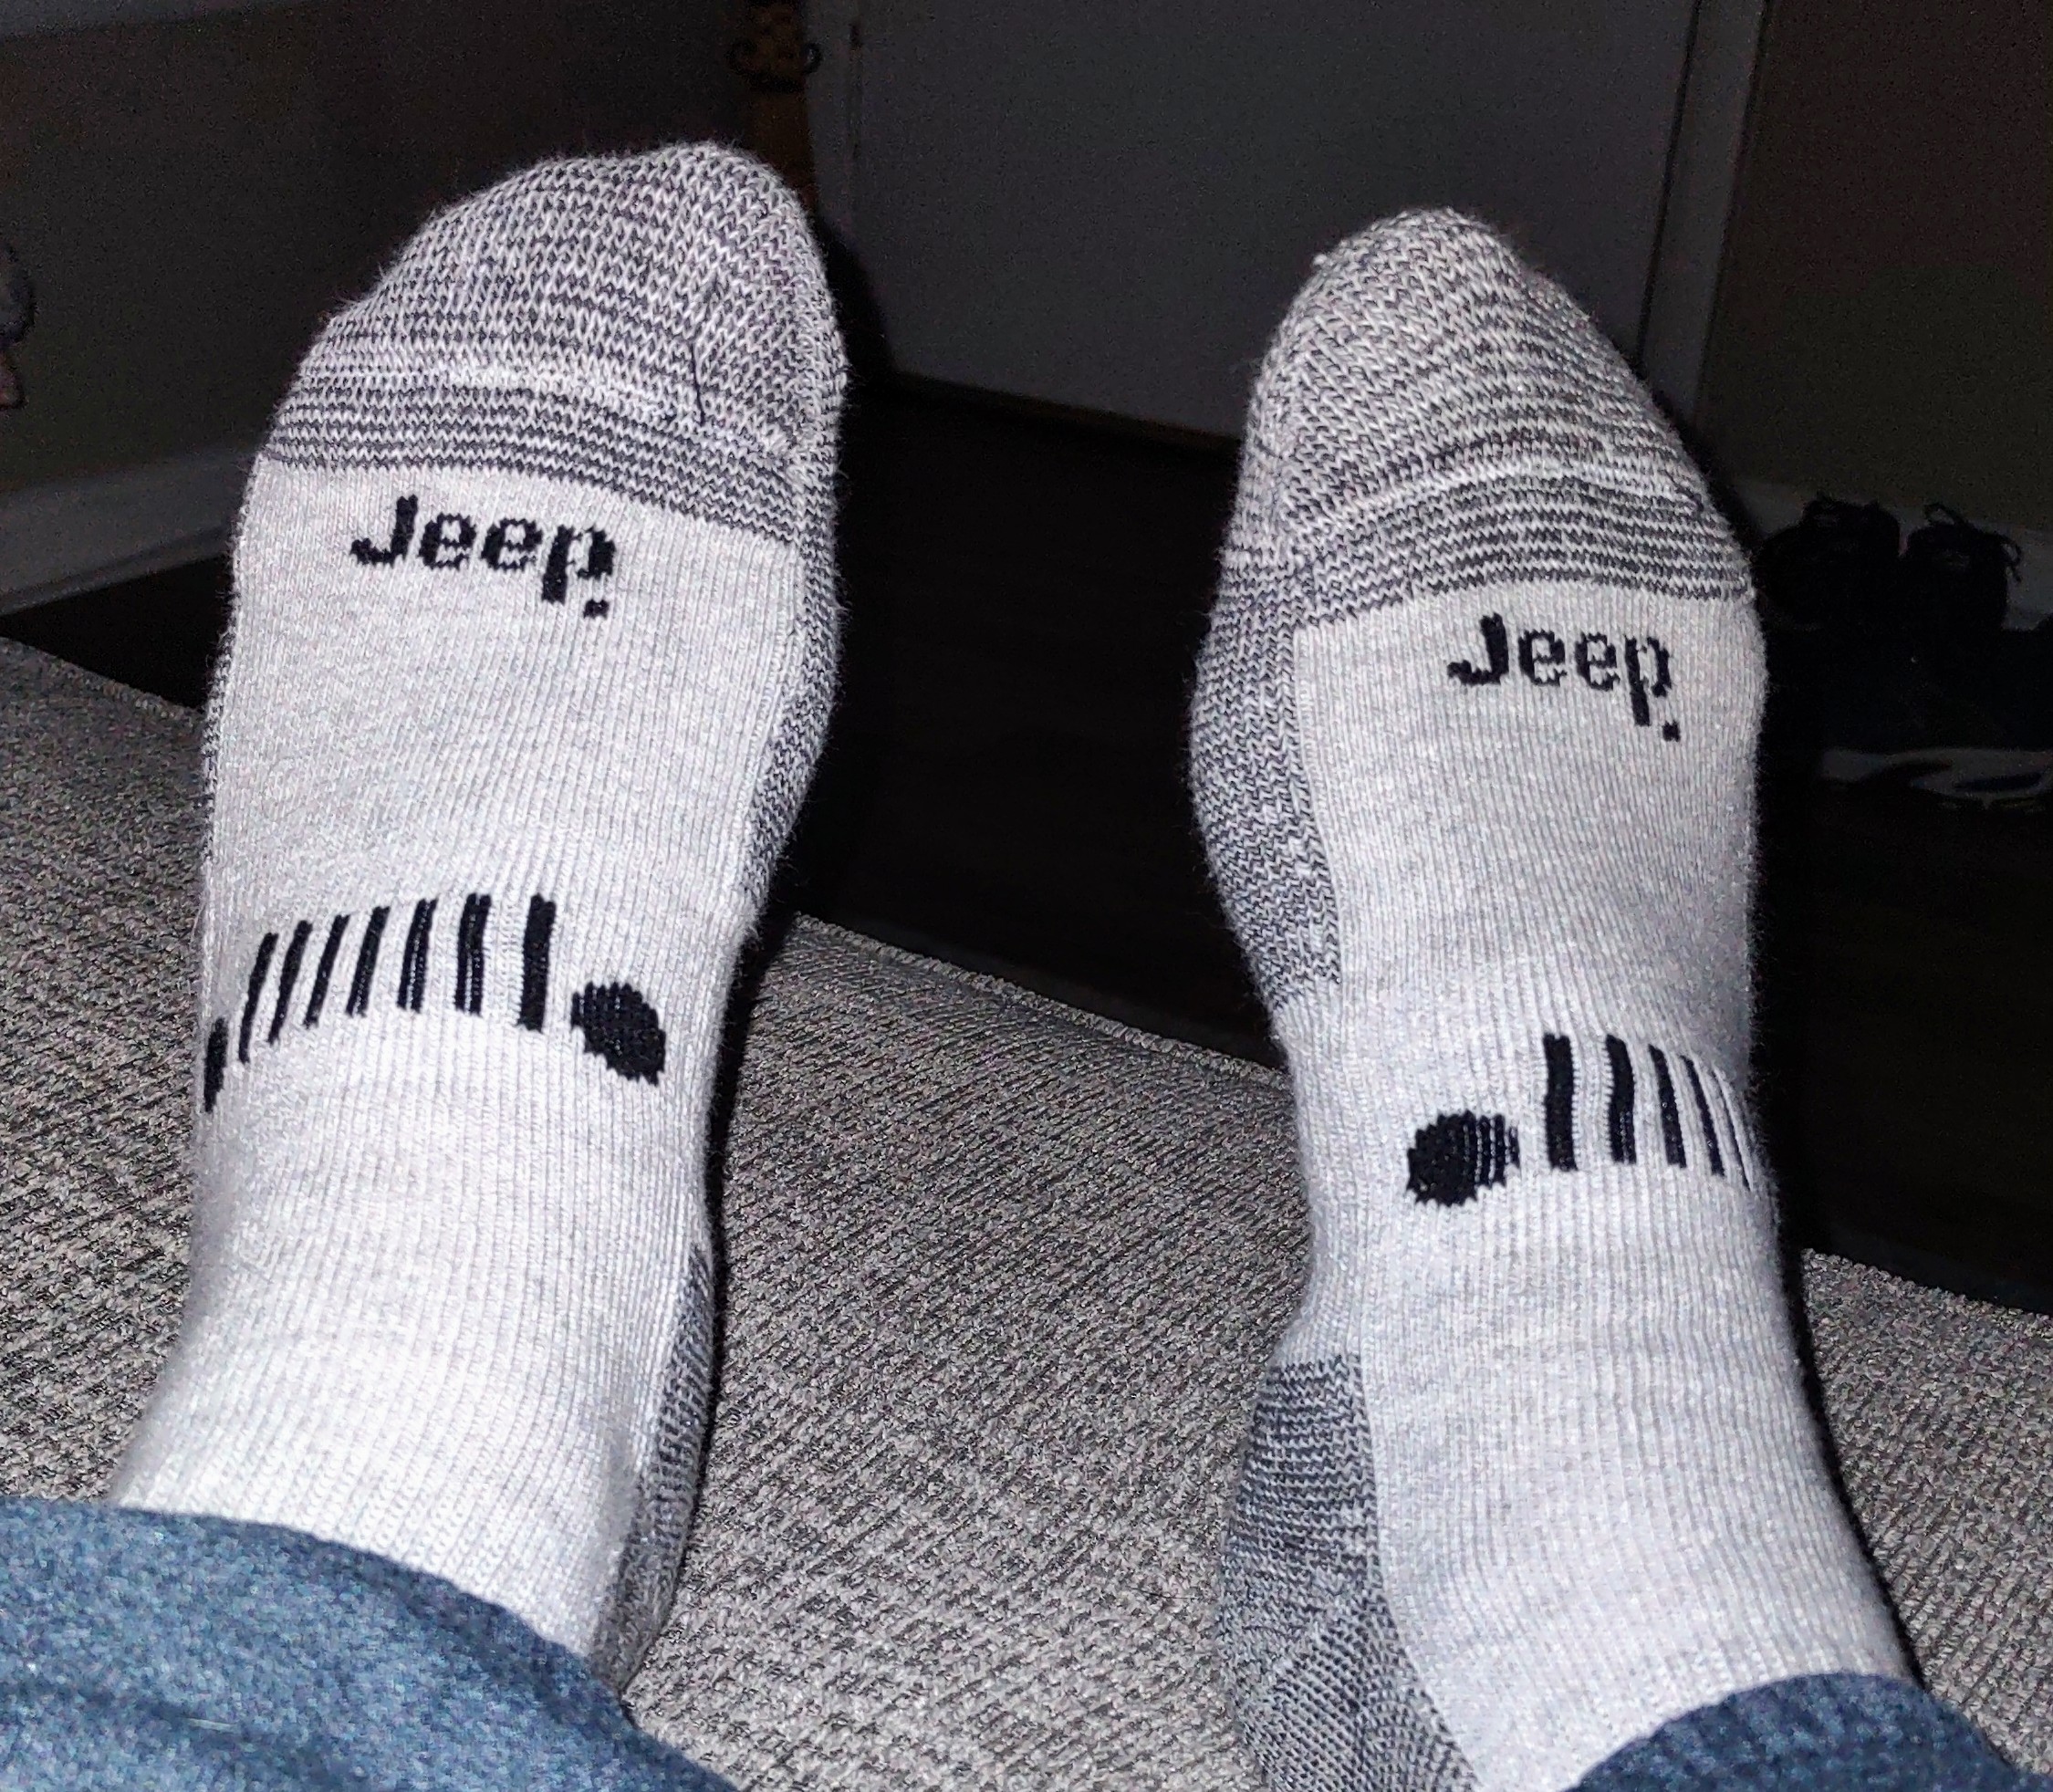 jeep socks.jpg